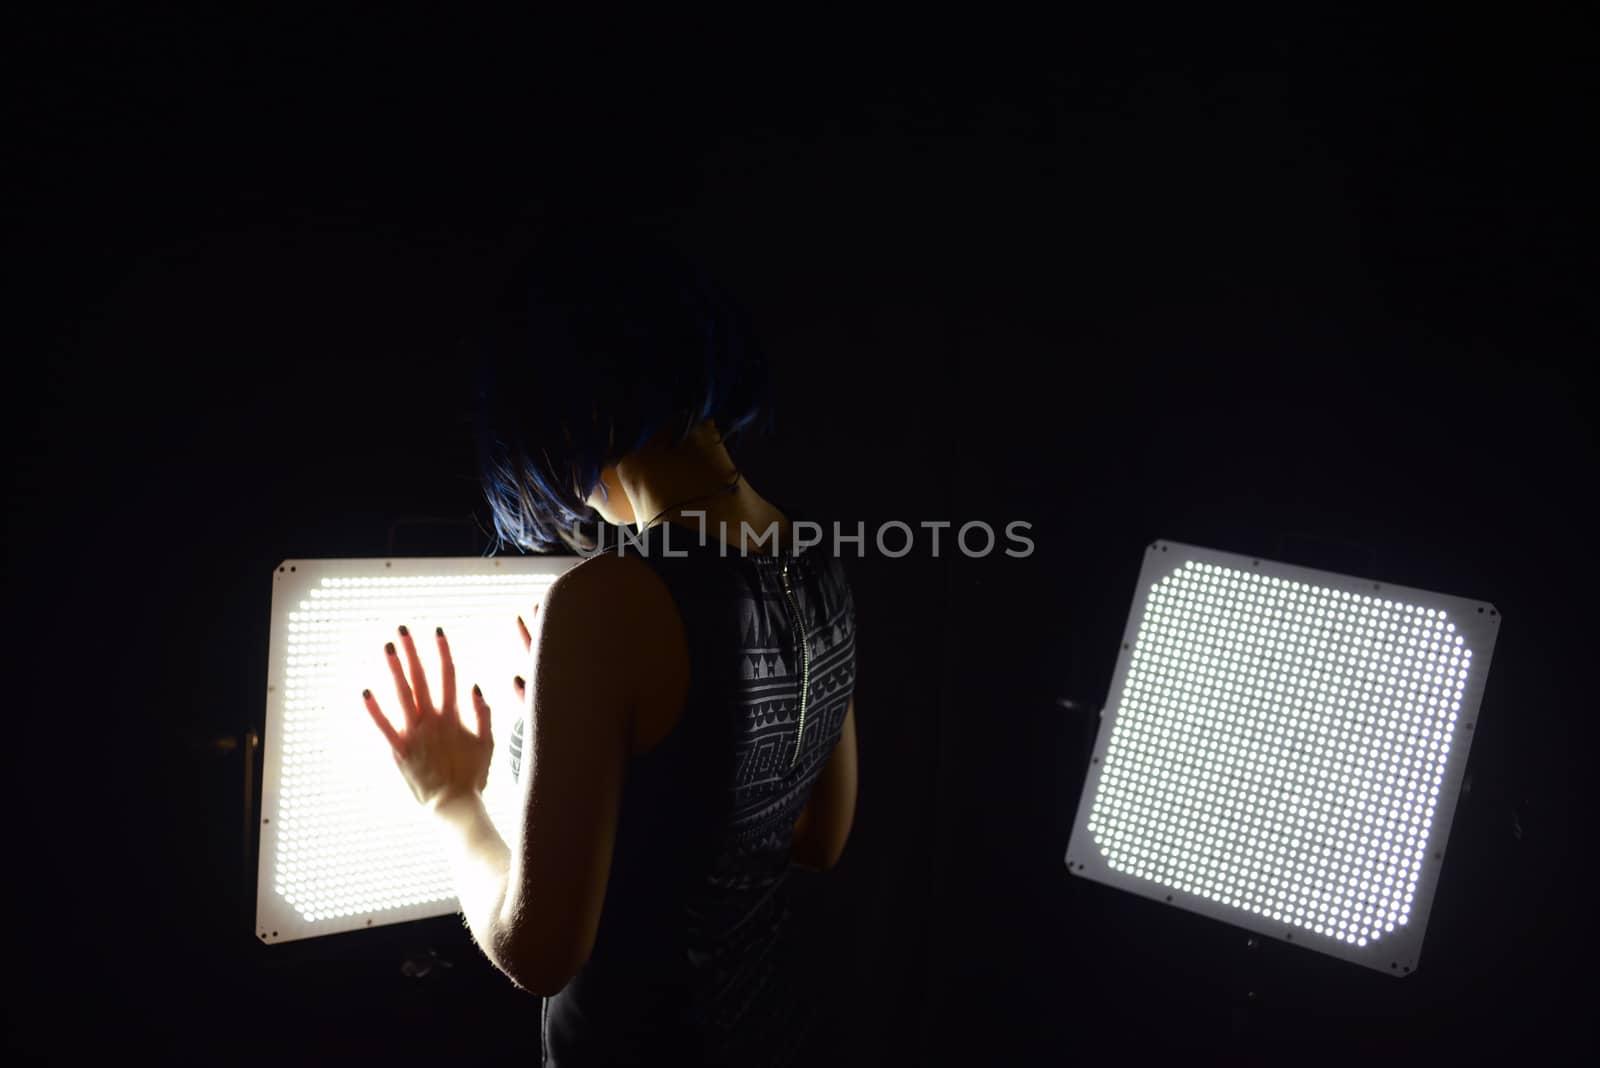 Cyberpunk woman silhouette by dk_photos